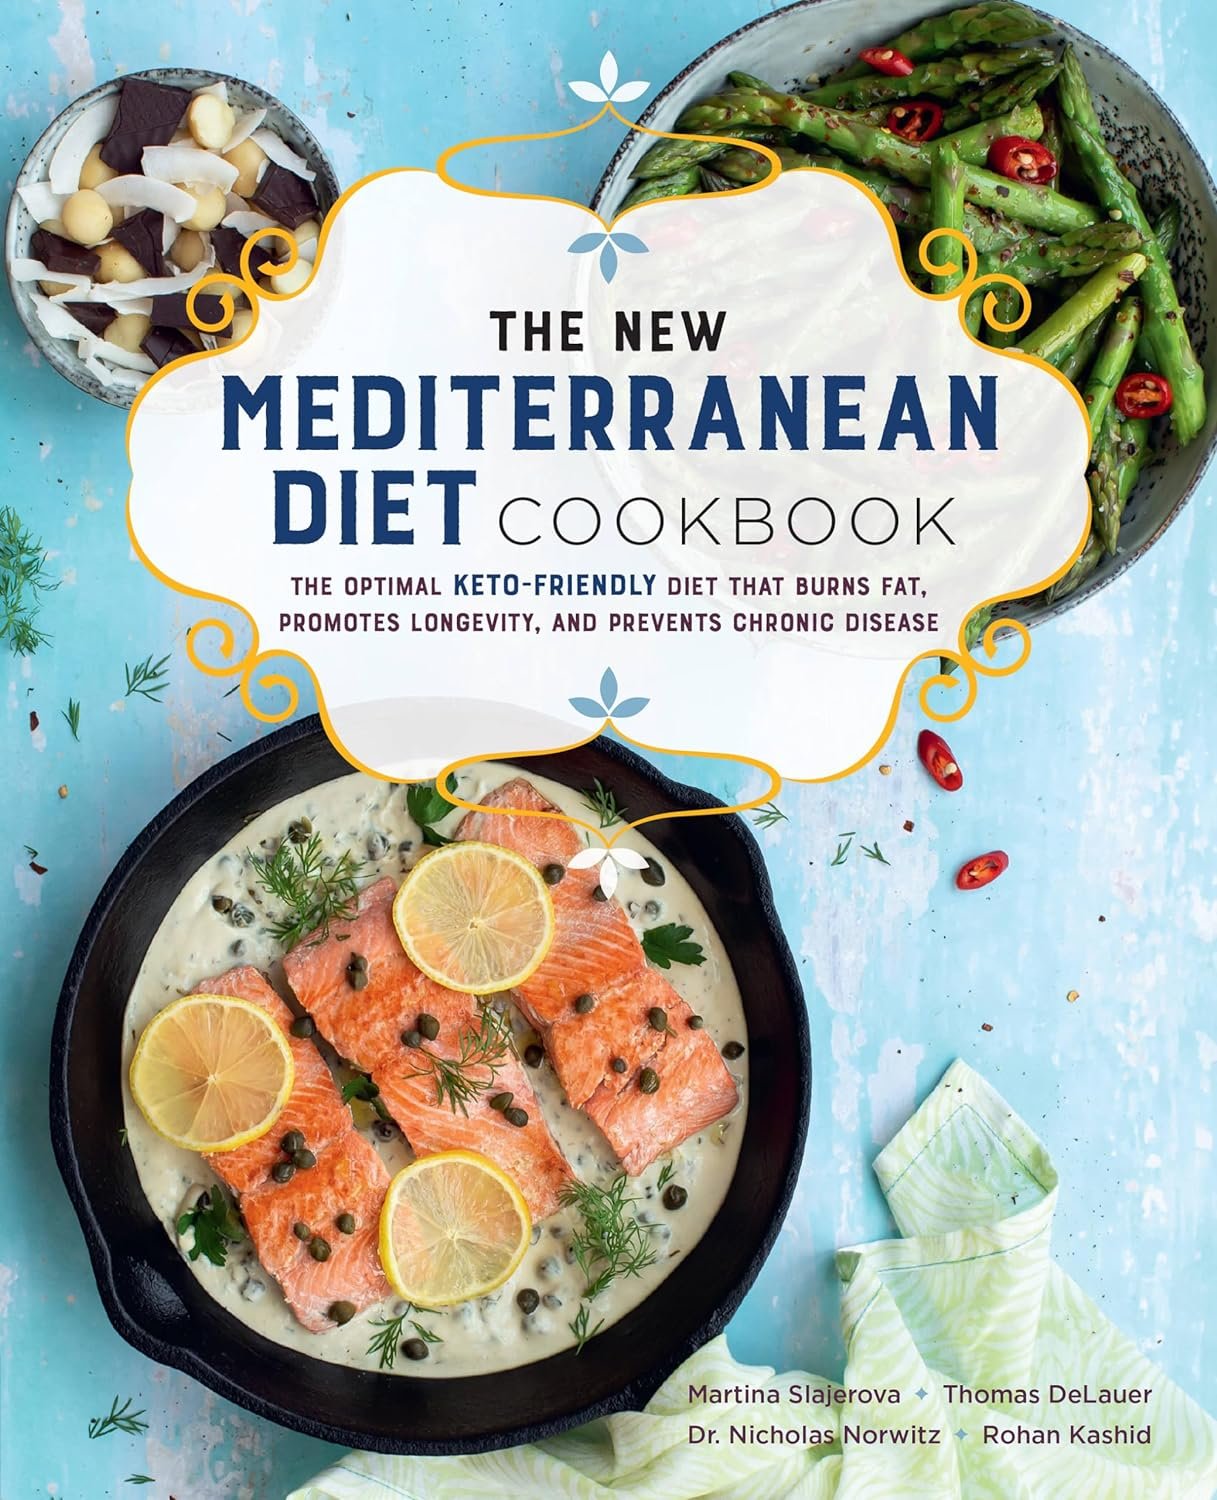 The New Mediterranean Diet Cookbook: The Optimal Keto-Friend…